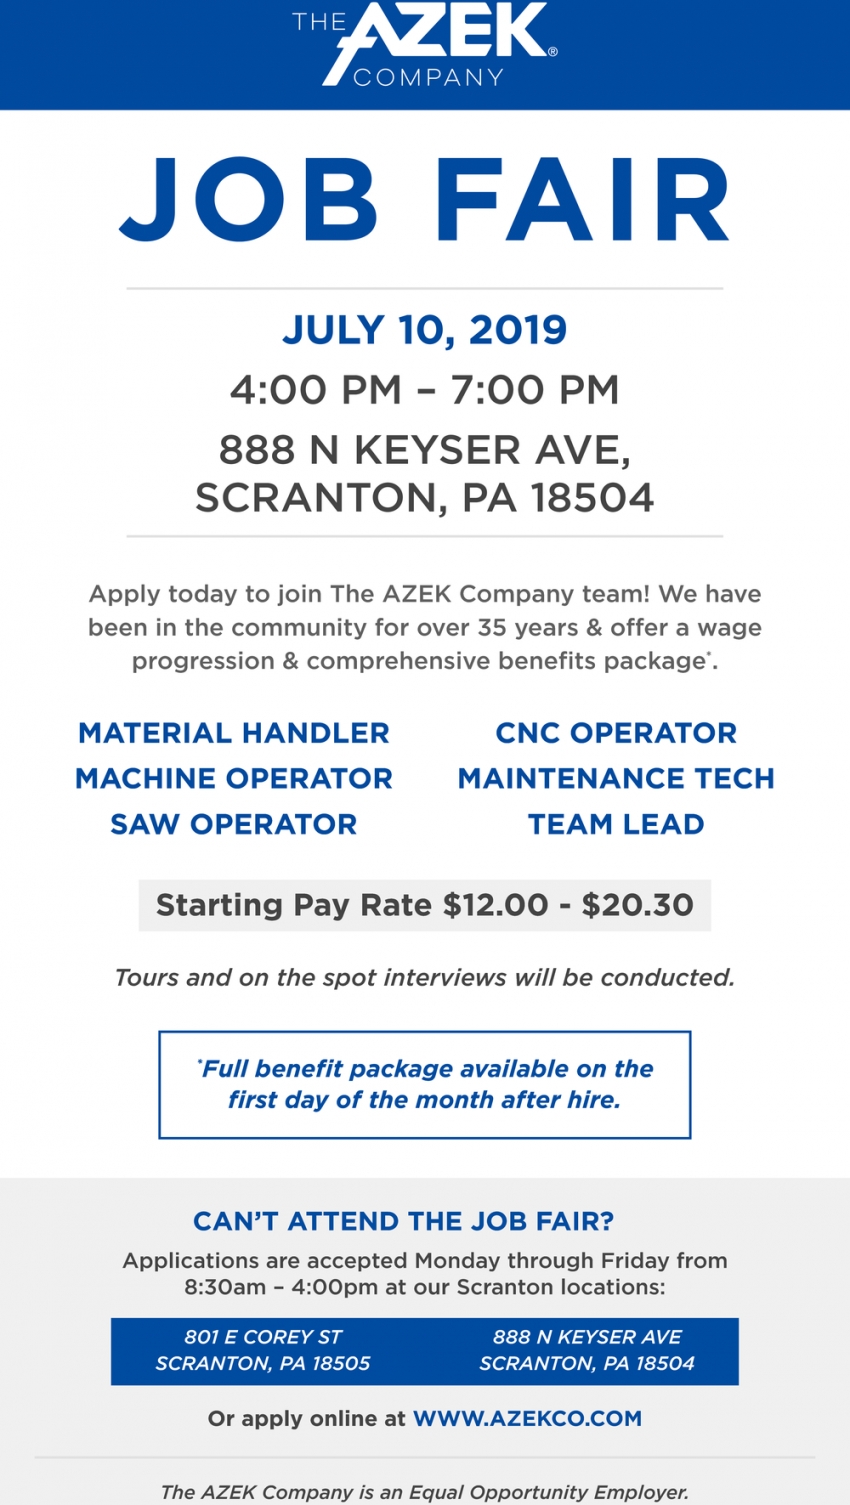 Job Fair, The Azek Company, Scranton, PA